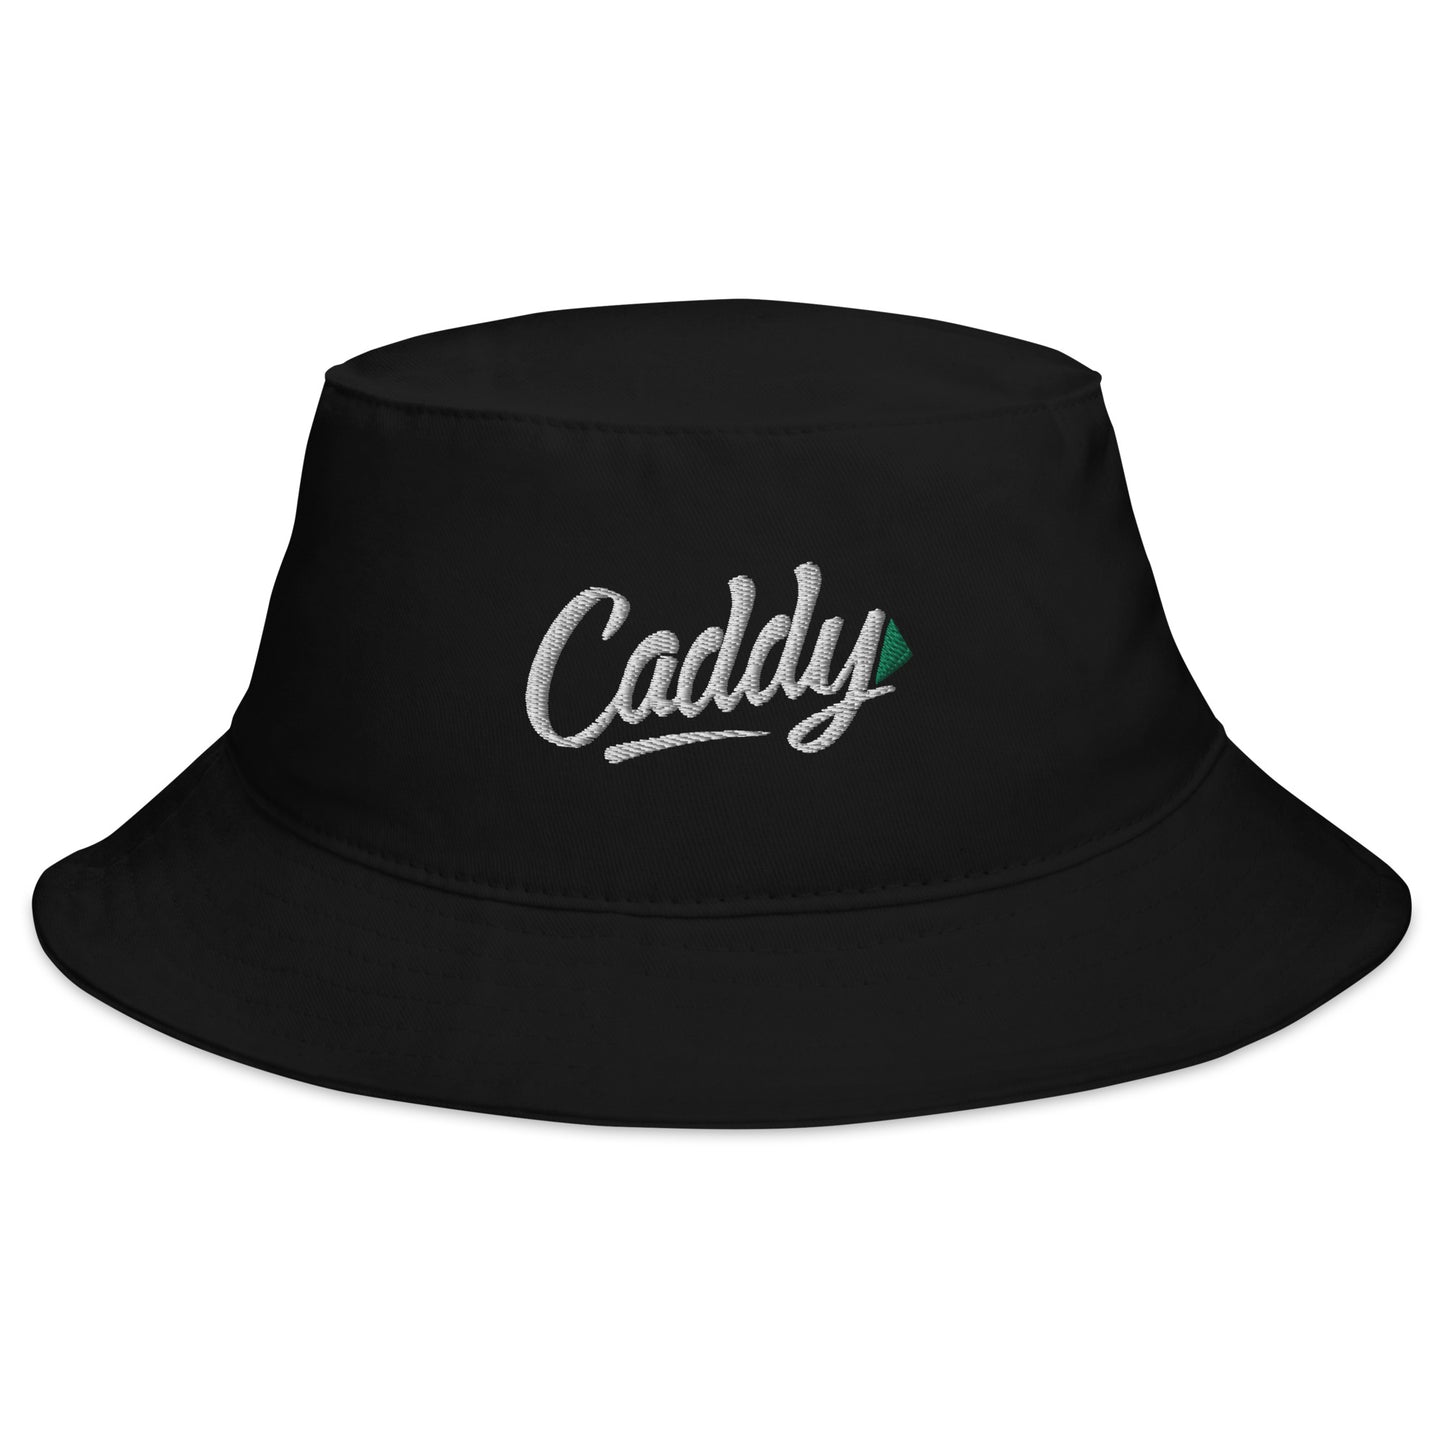 Caddy Bucket Hat